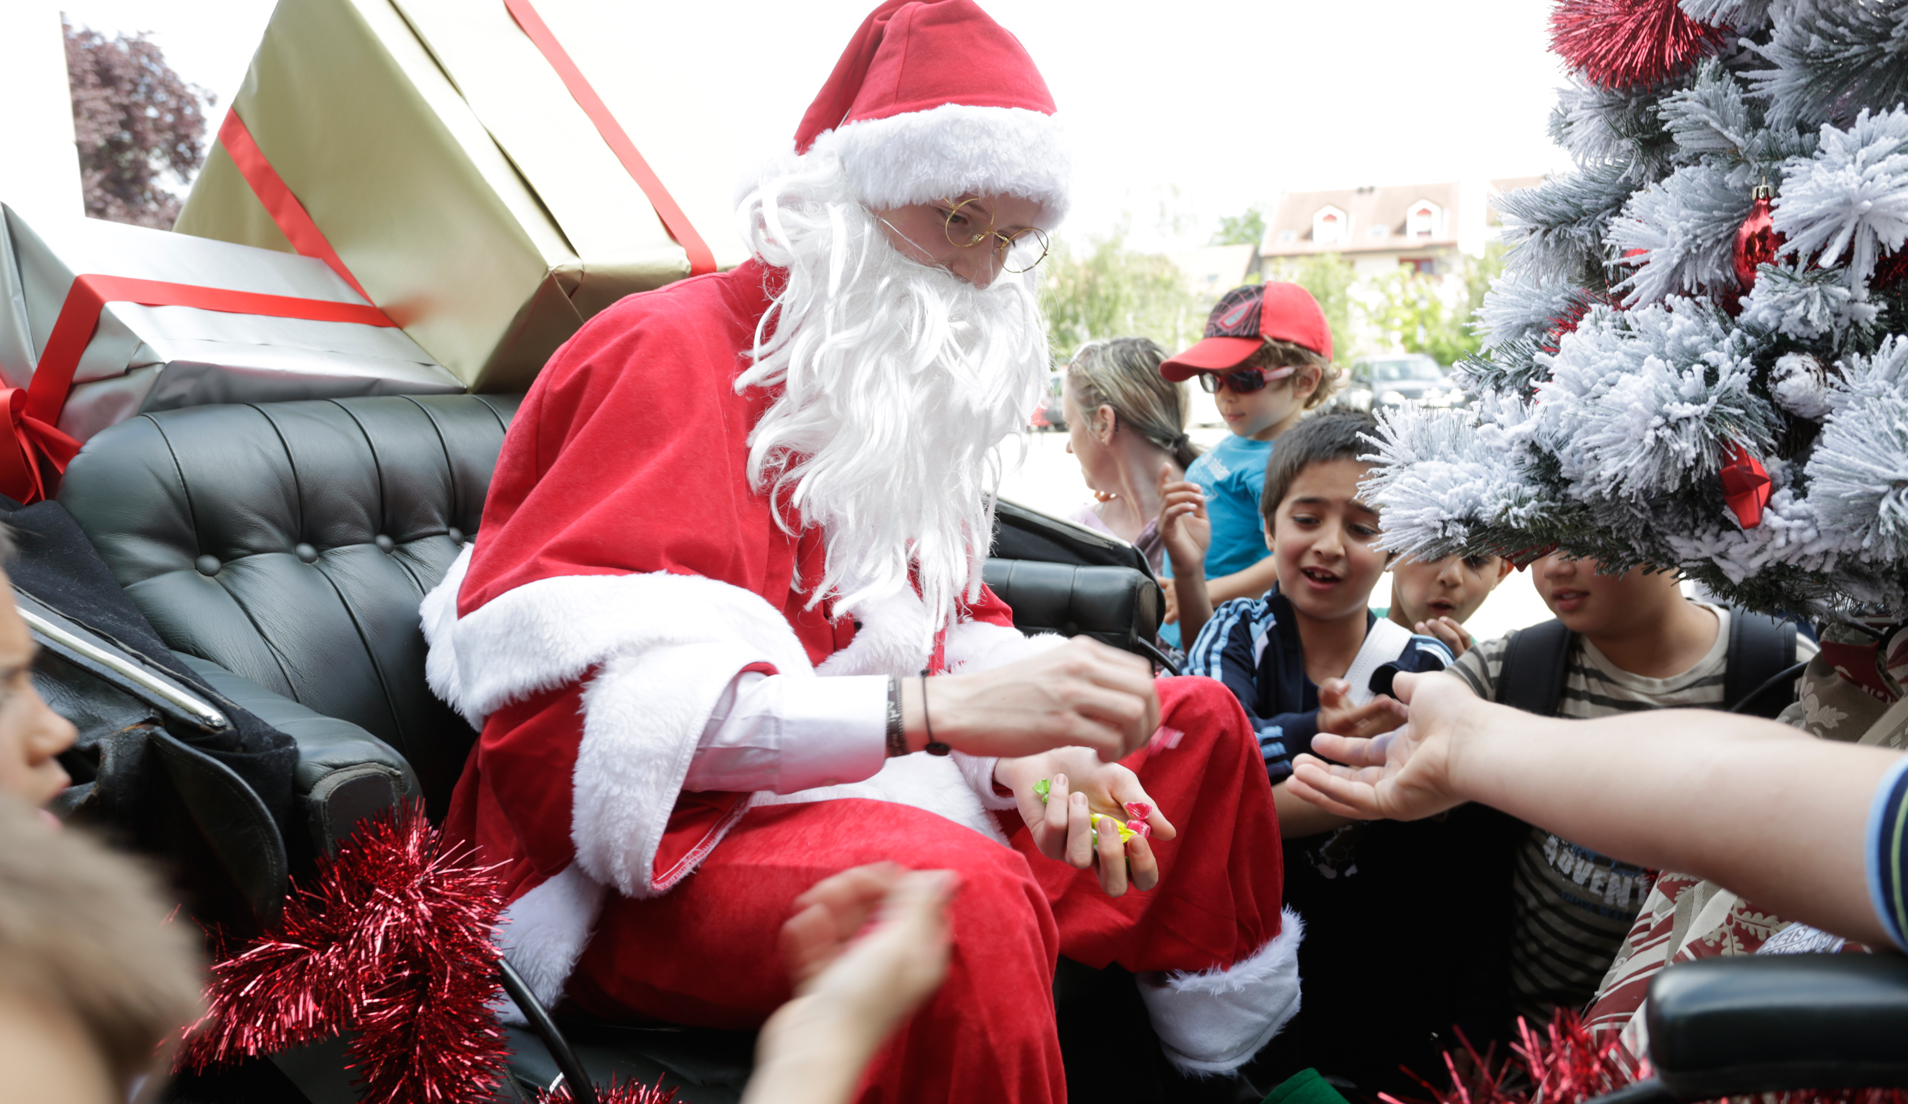 Guerrilla marketing Santa Claus giving candies